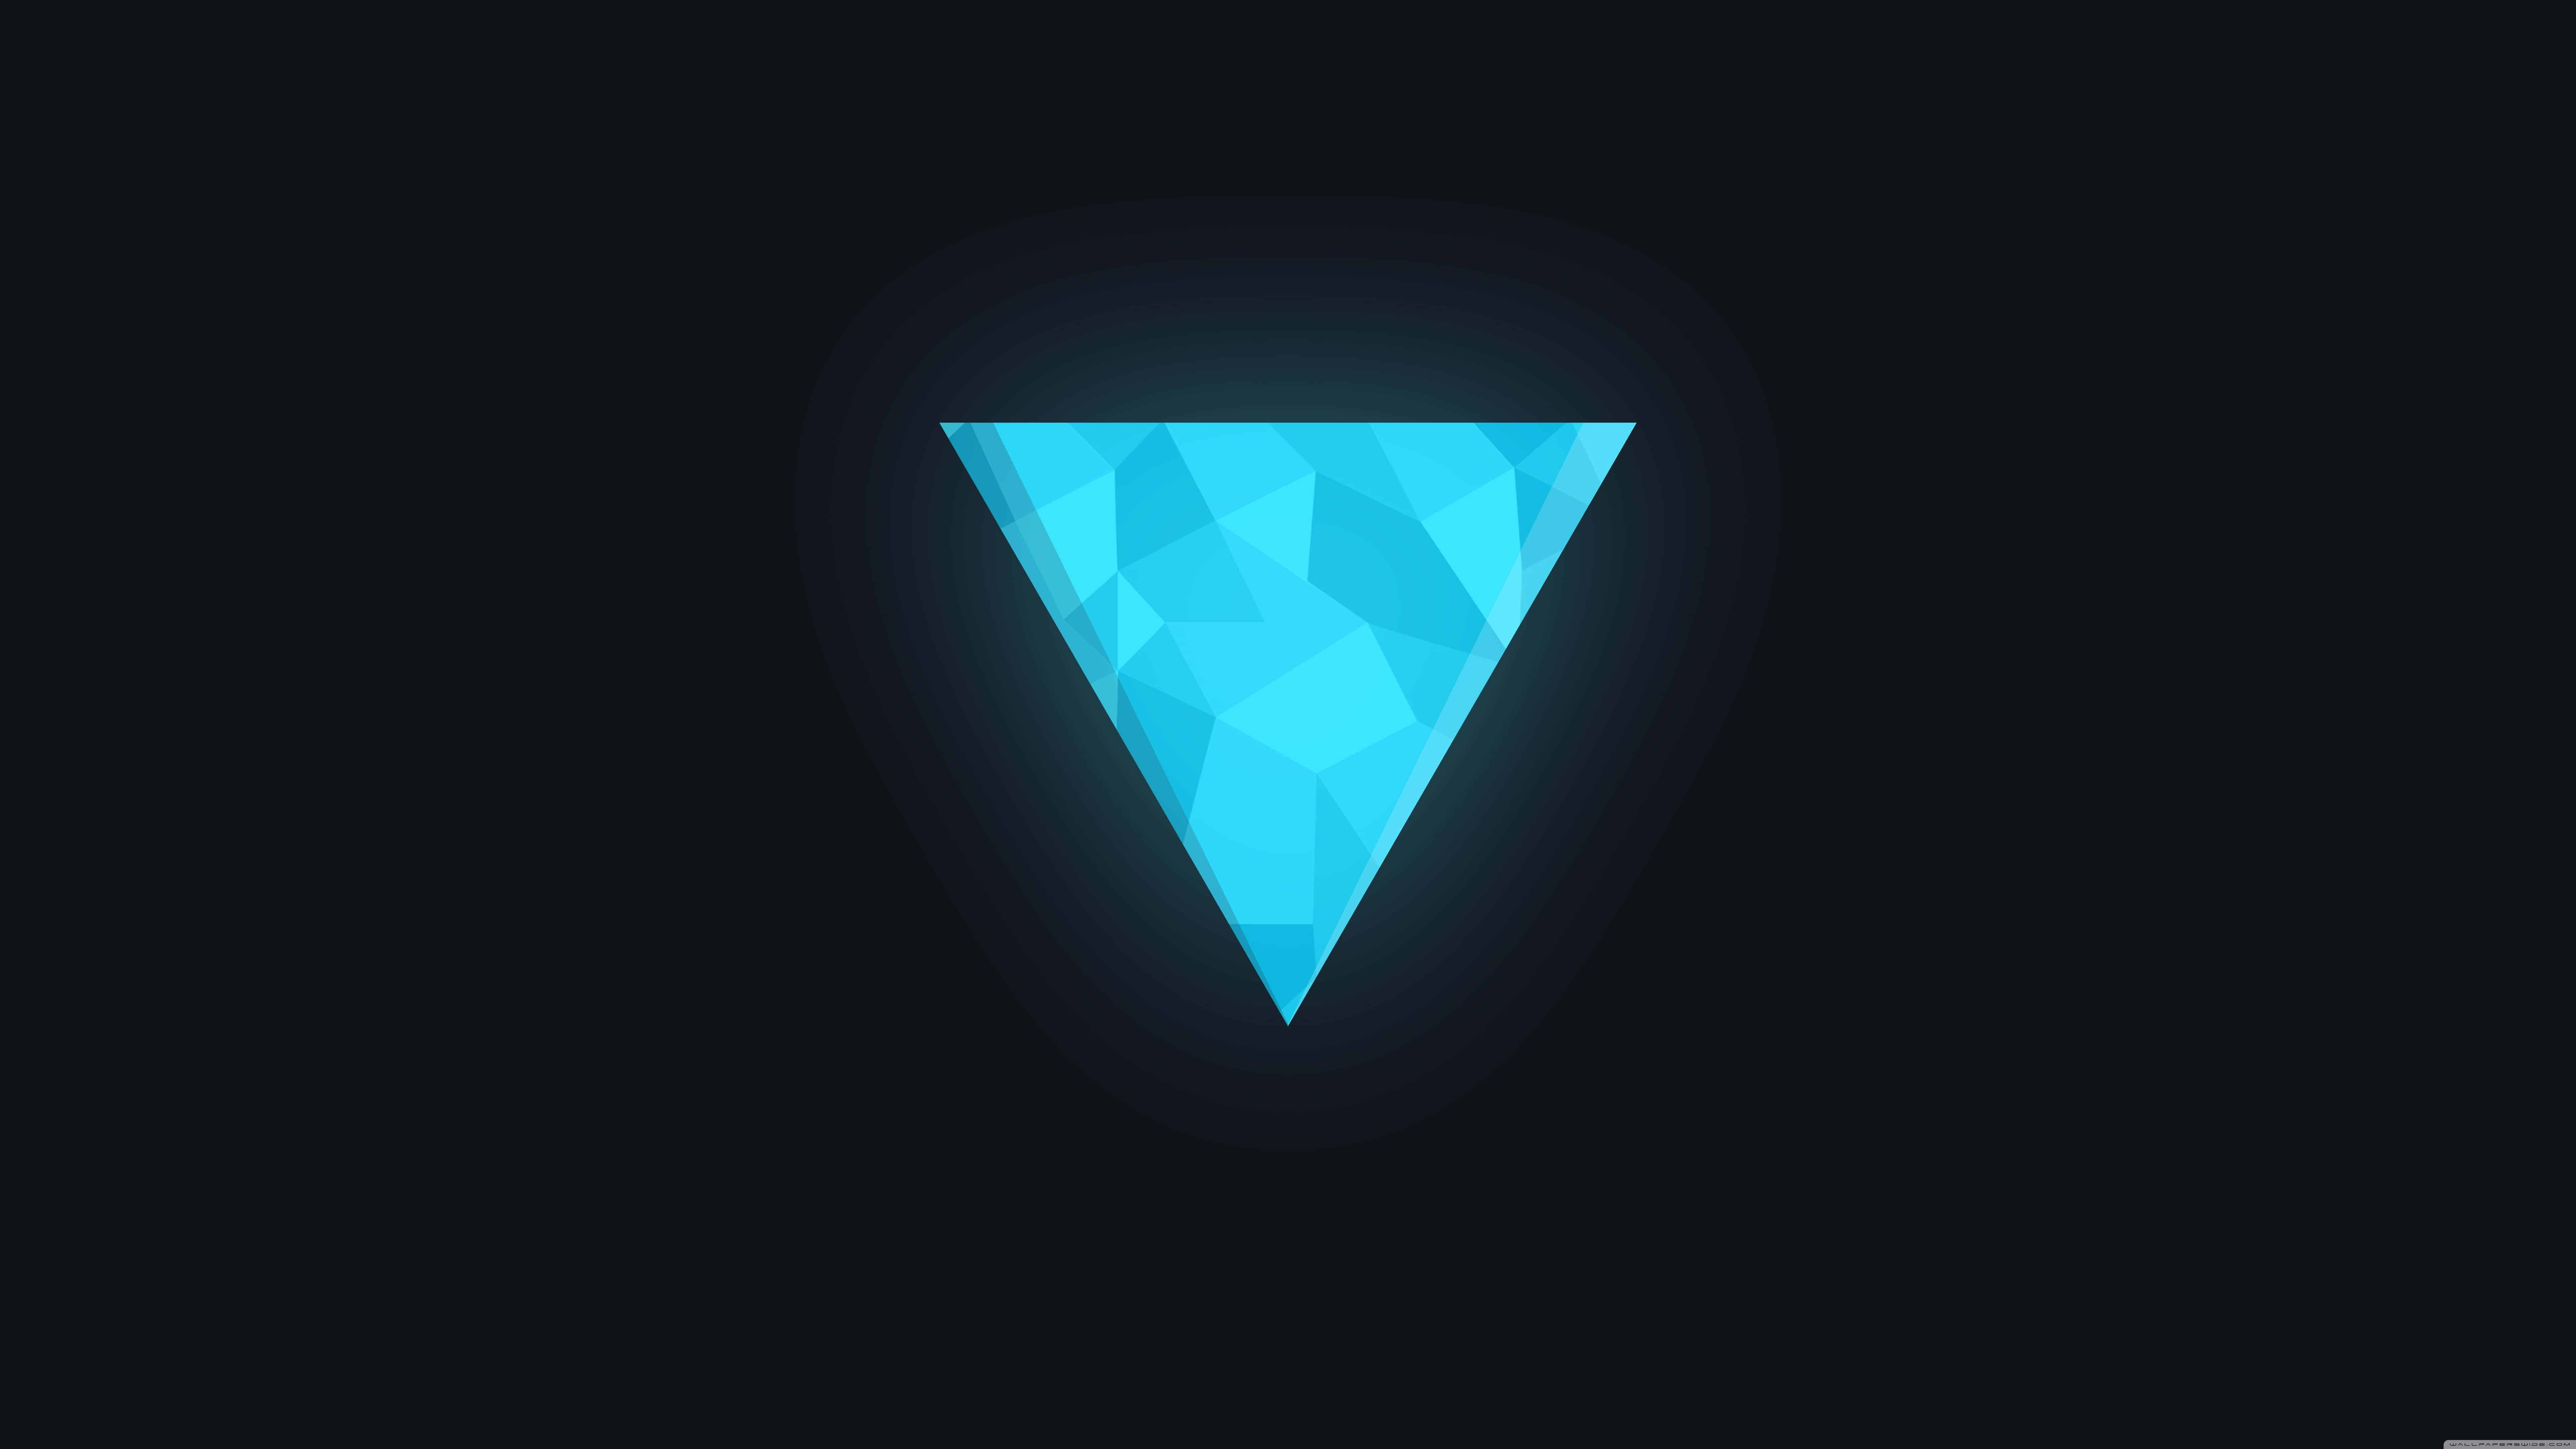 Triángulo geométrico azul UHD 8K fondo de pantalla | Pixelz